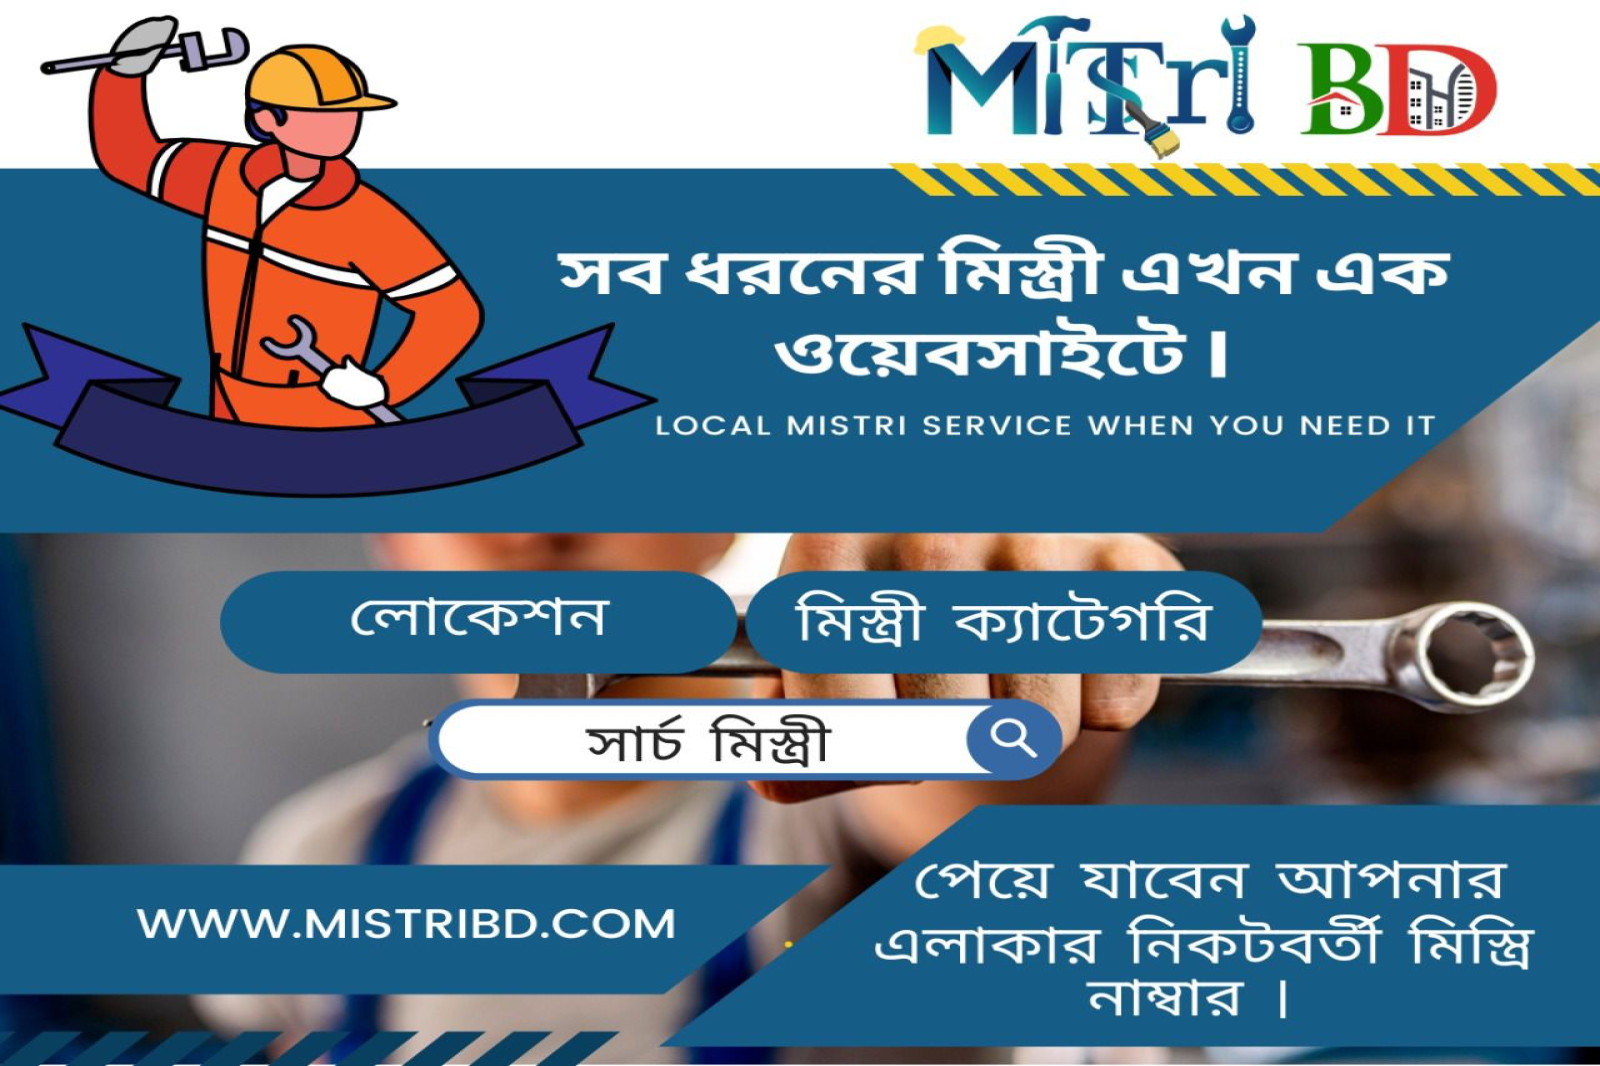 Mistribd.com: Your Trusted Technician Service Provider in Bangladesh